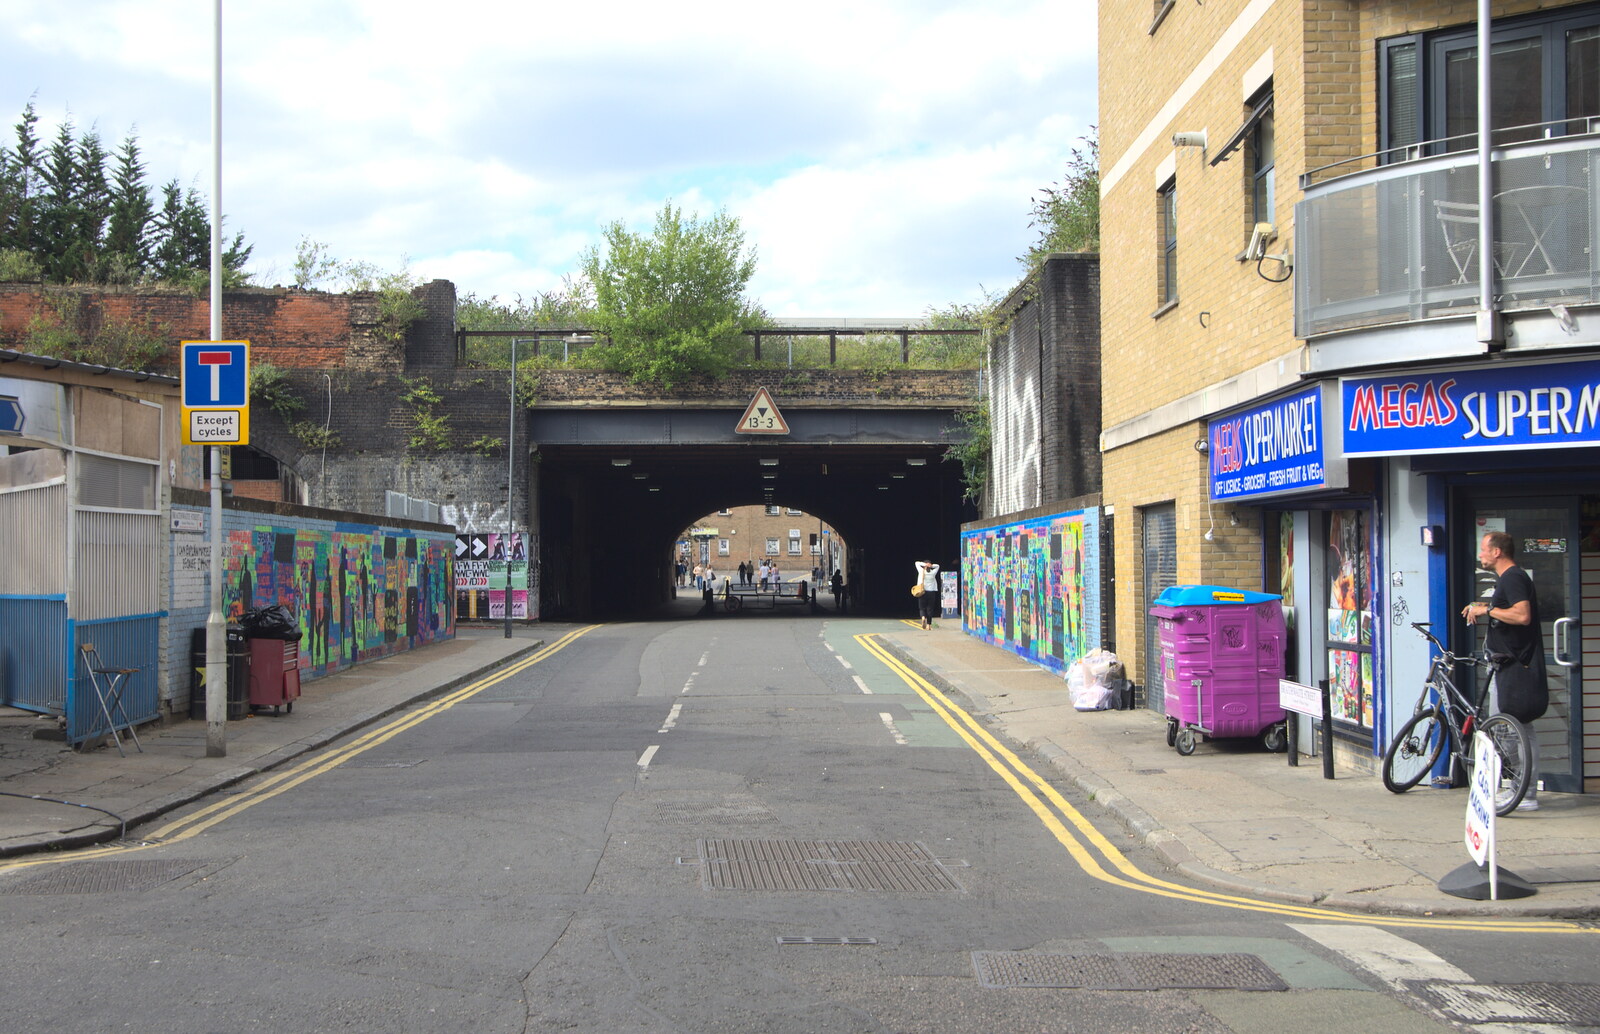 Railway bridge on Wheler Street from Spitalfields and Brick Lane Street Art, Whitechapel, London - 10th August 2013